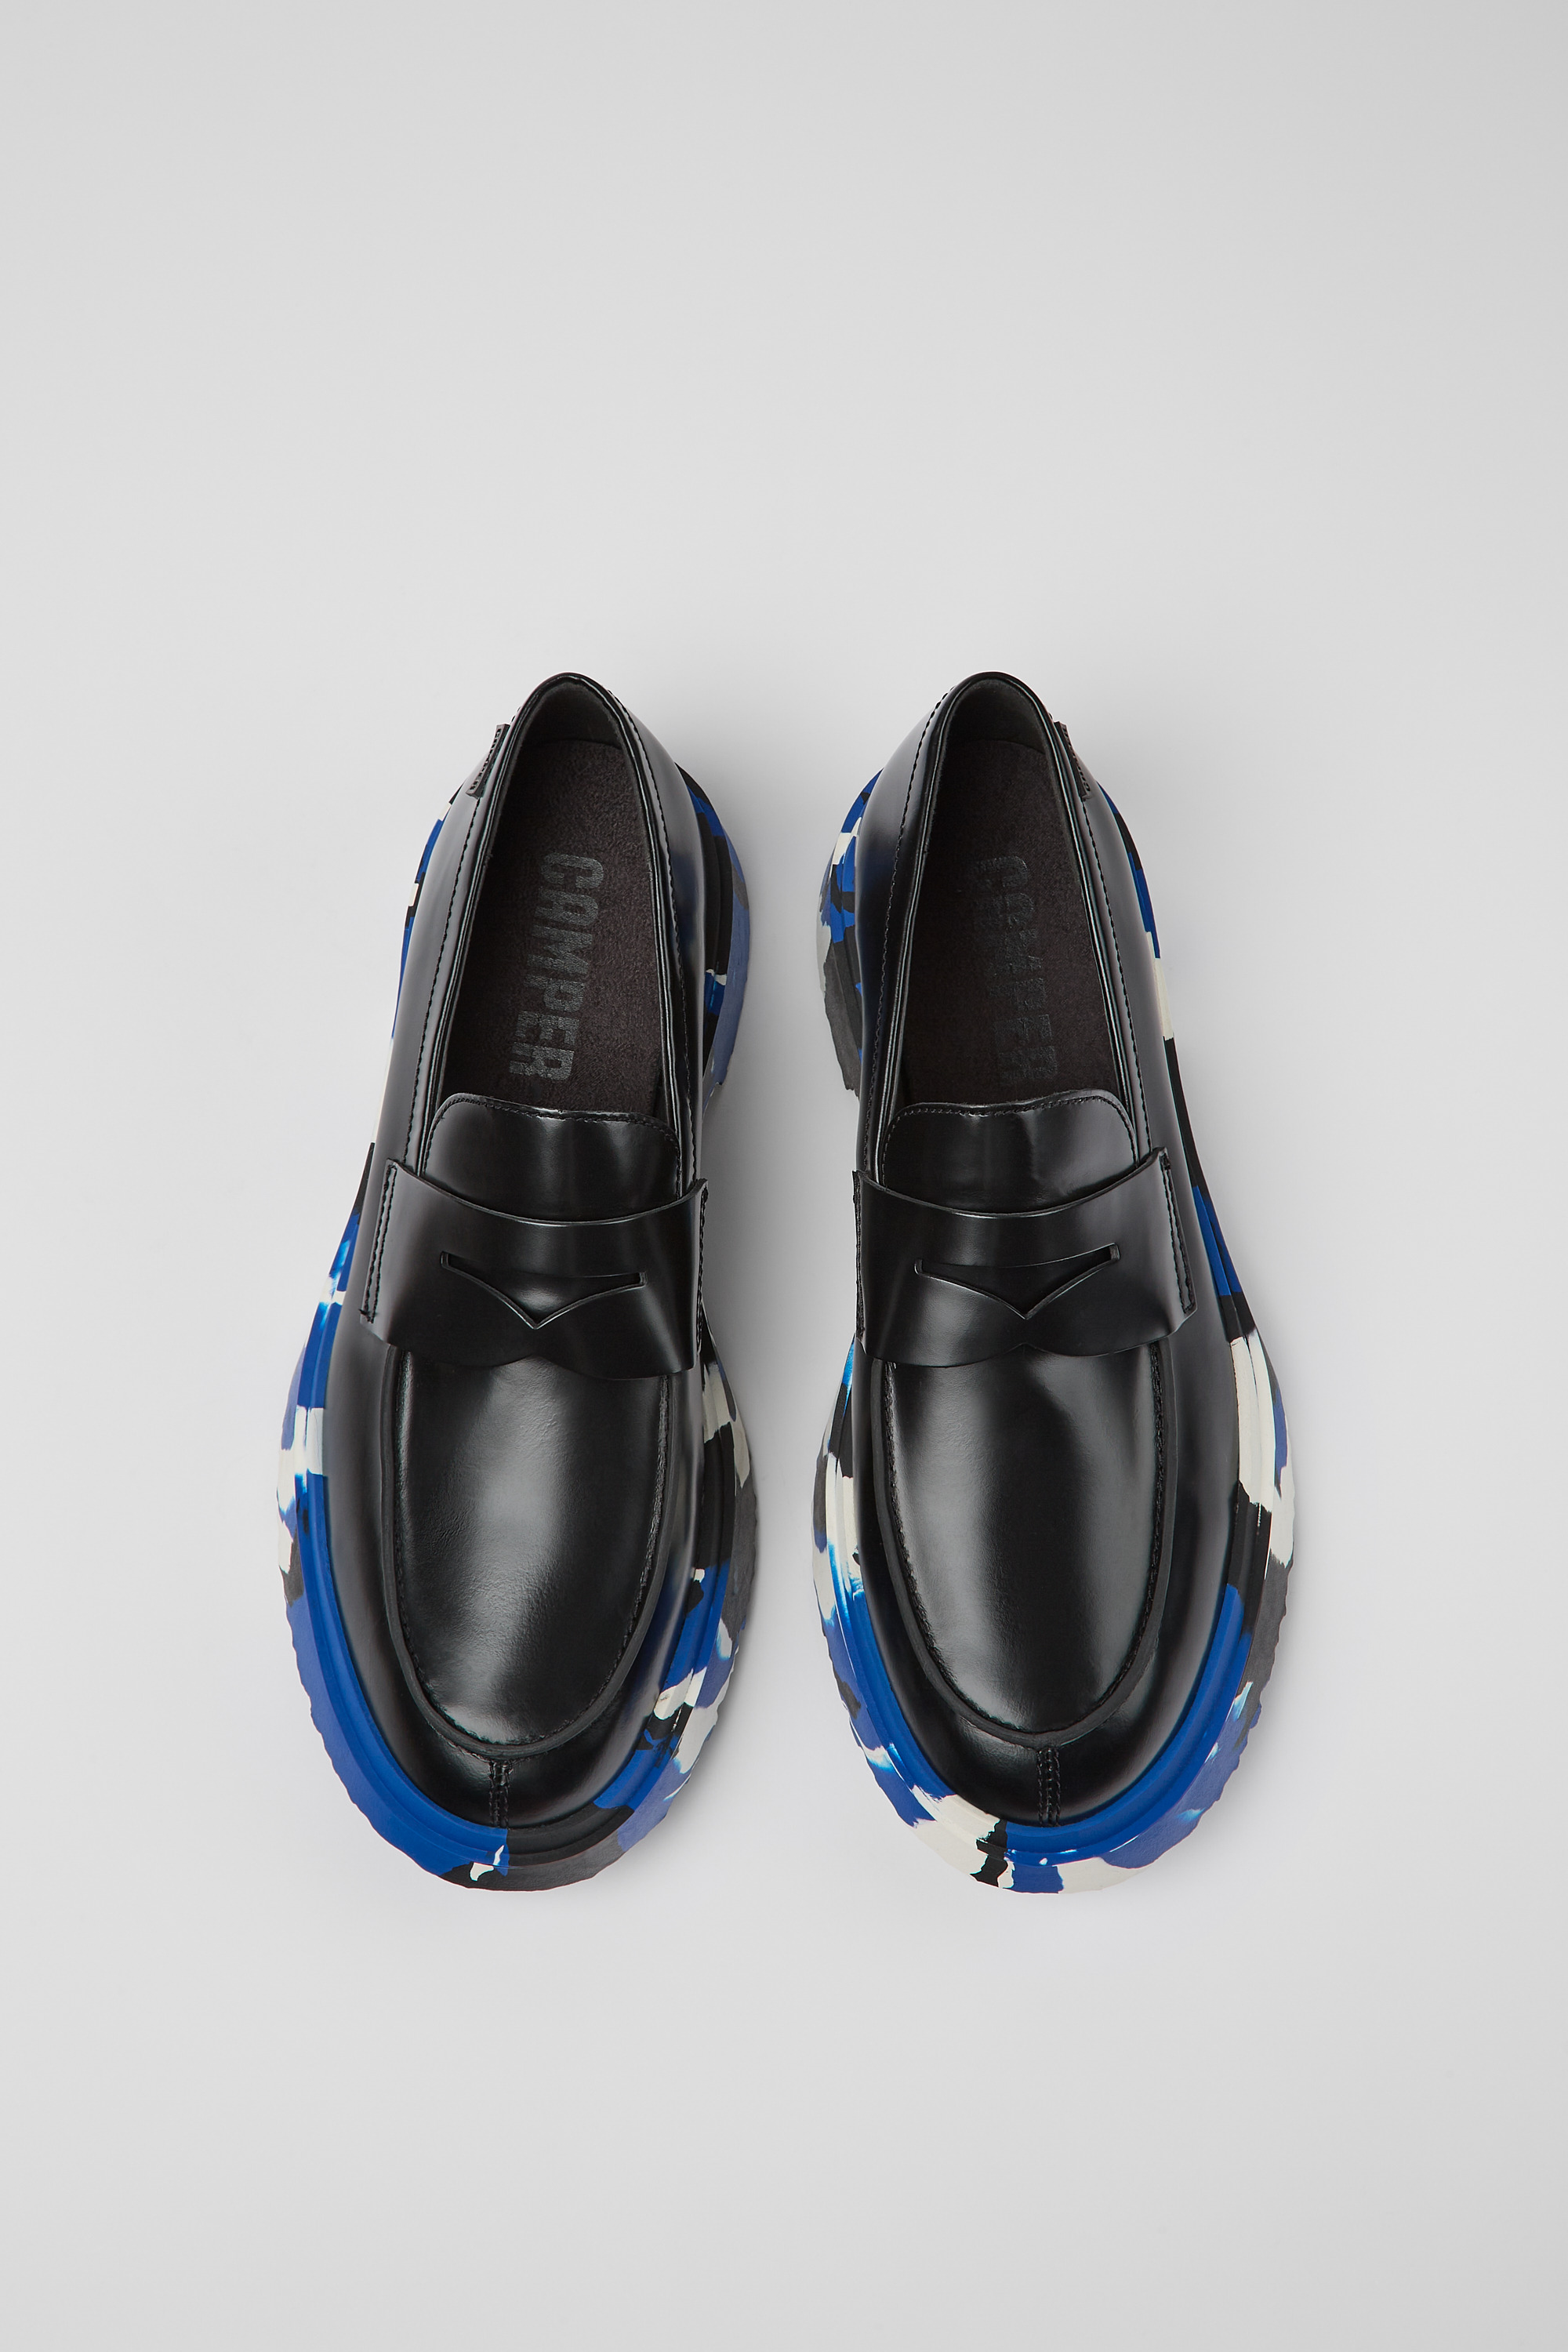 Walden Black Formal Shoes for Men - Fall/Winter collection - Camper USA